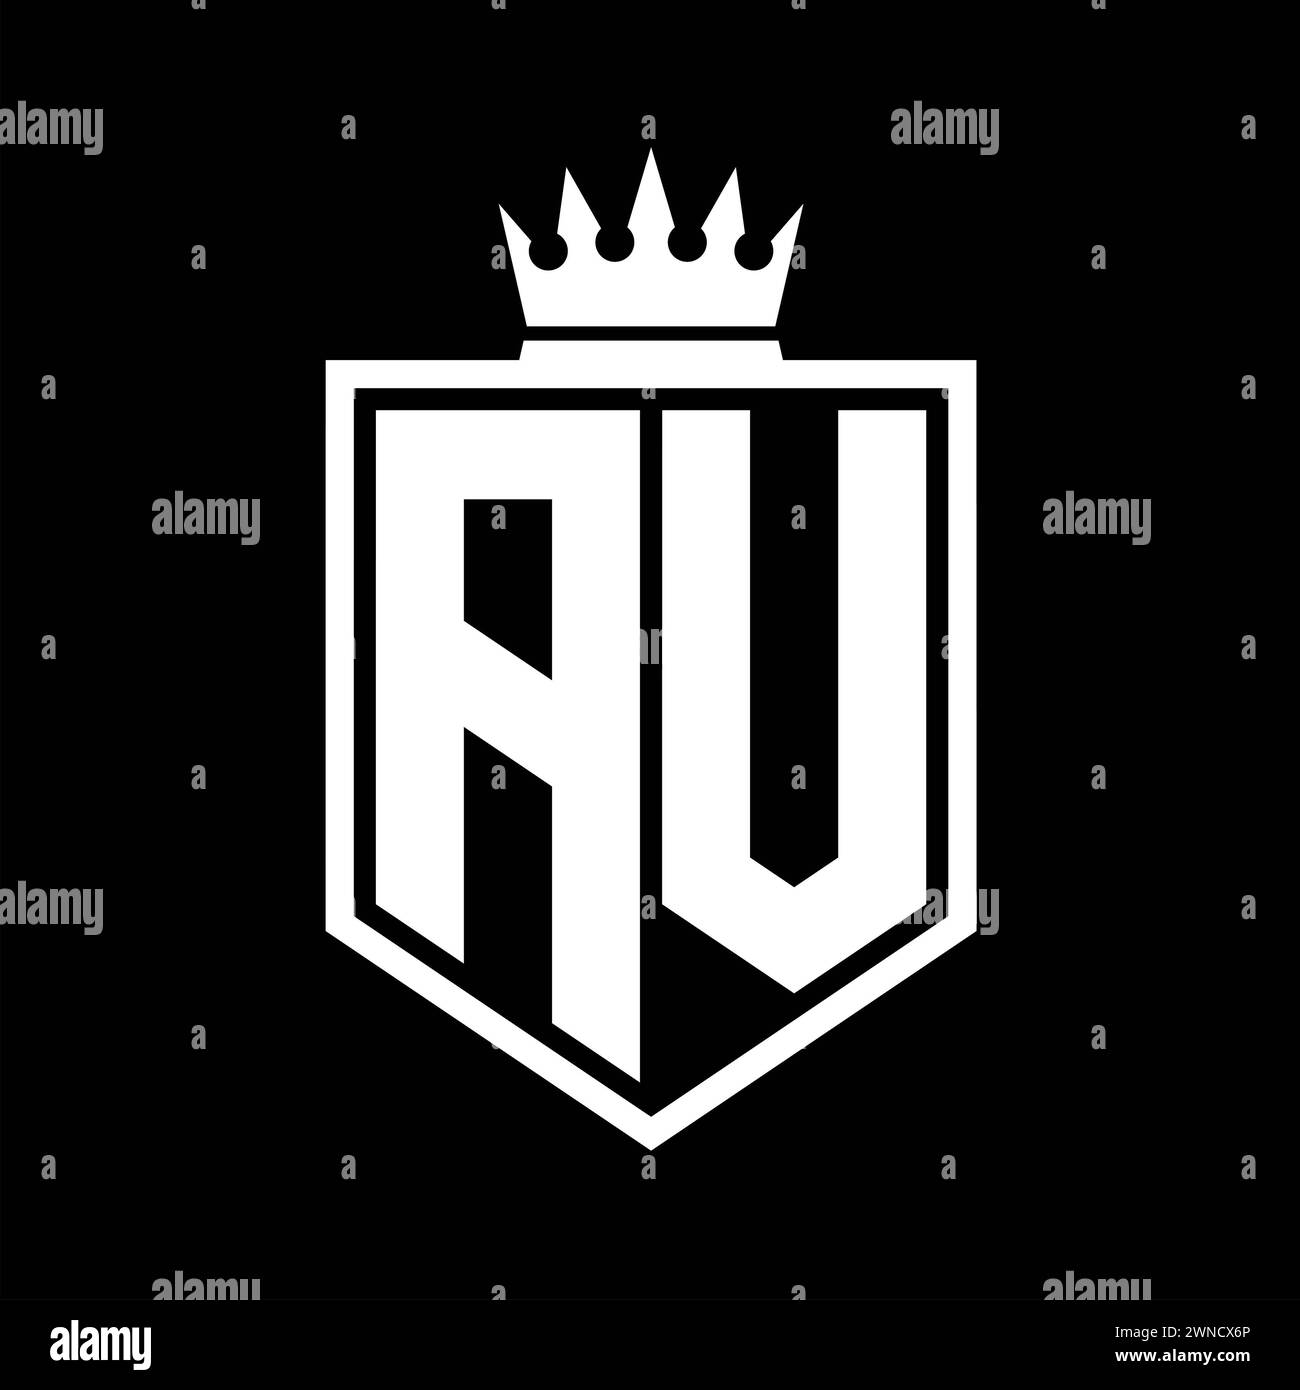 AV Letter Logo monogram bold shield geometric shape with crown outline black and white style design template Stock Photo